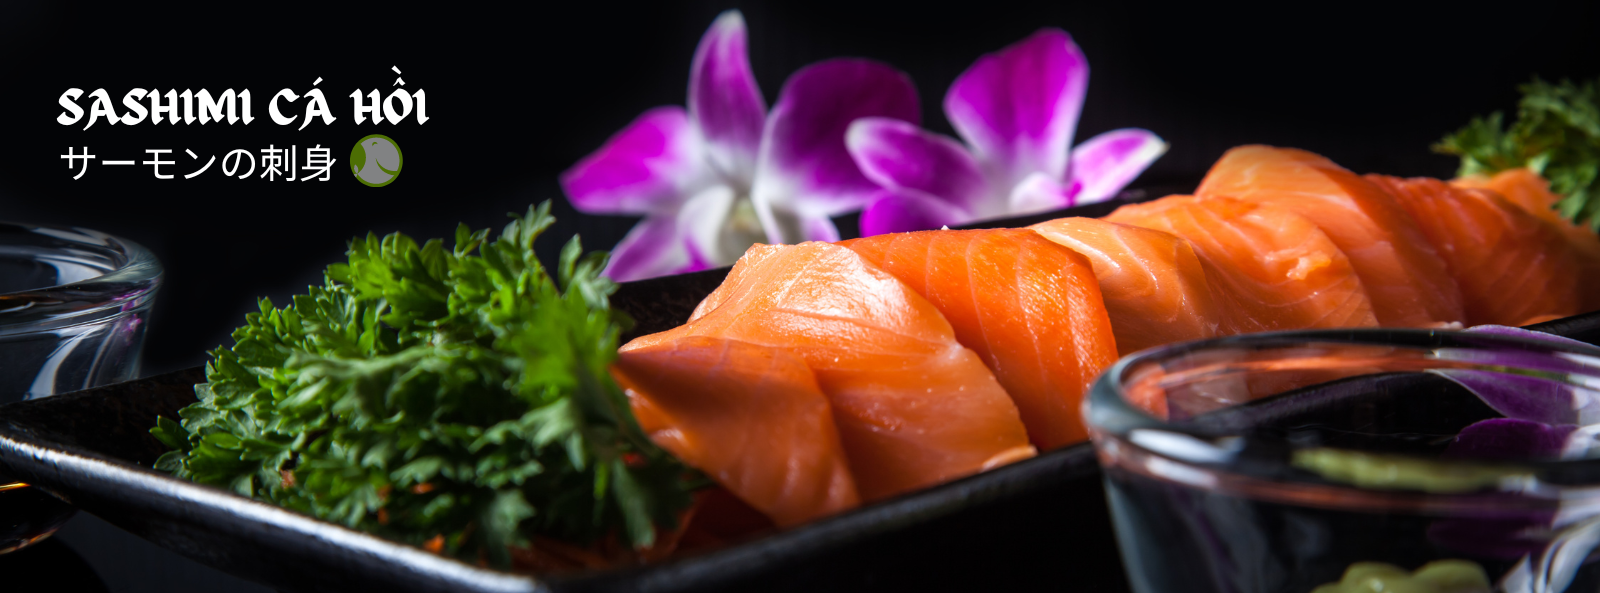 Sashimi Cá Hồi Nauy